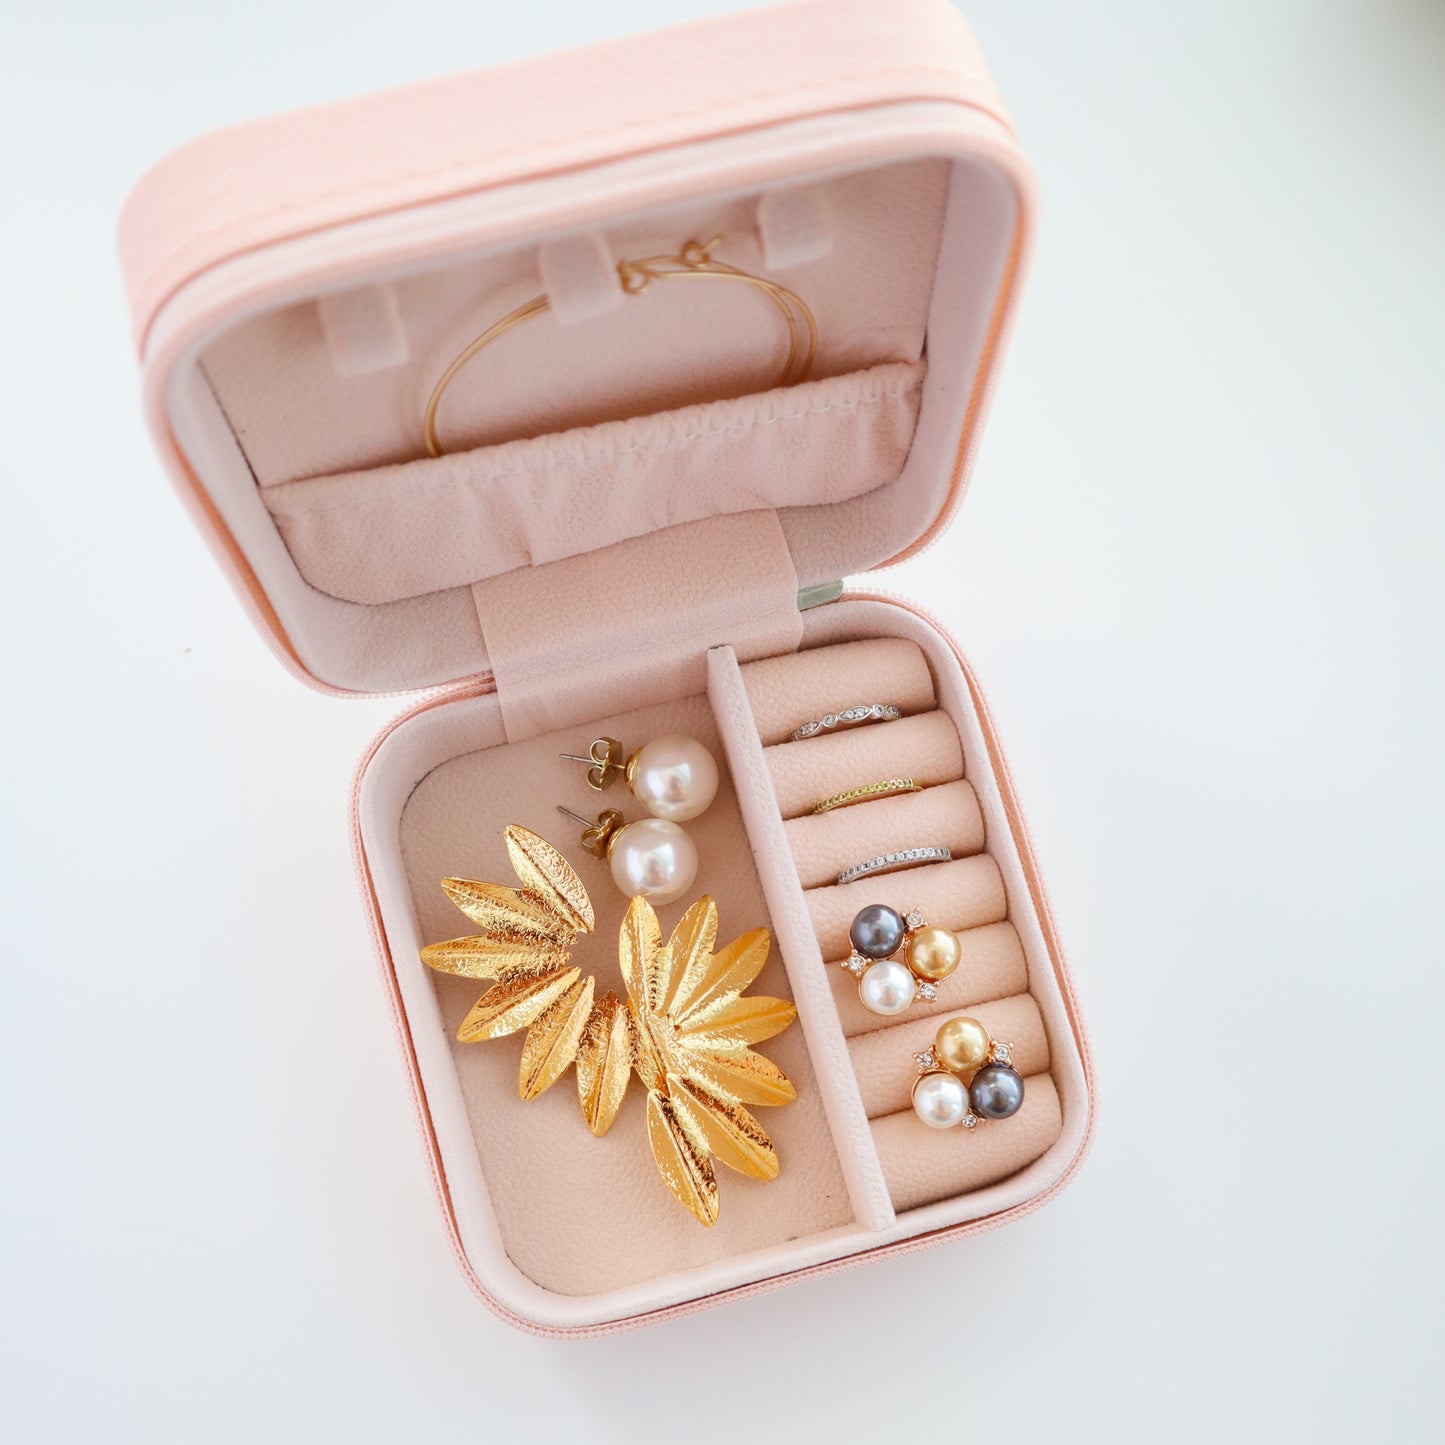 Travel Jewelry Case - Pink